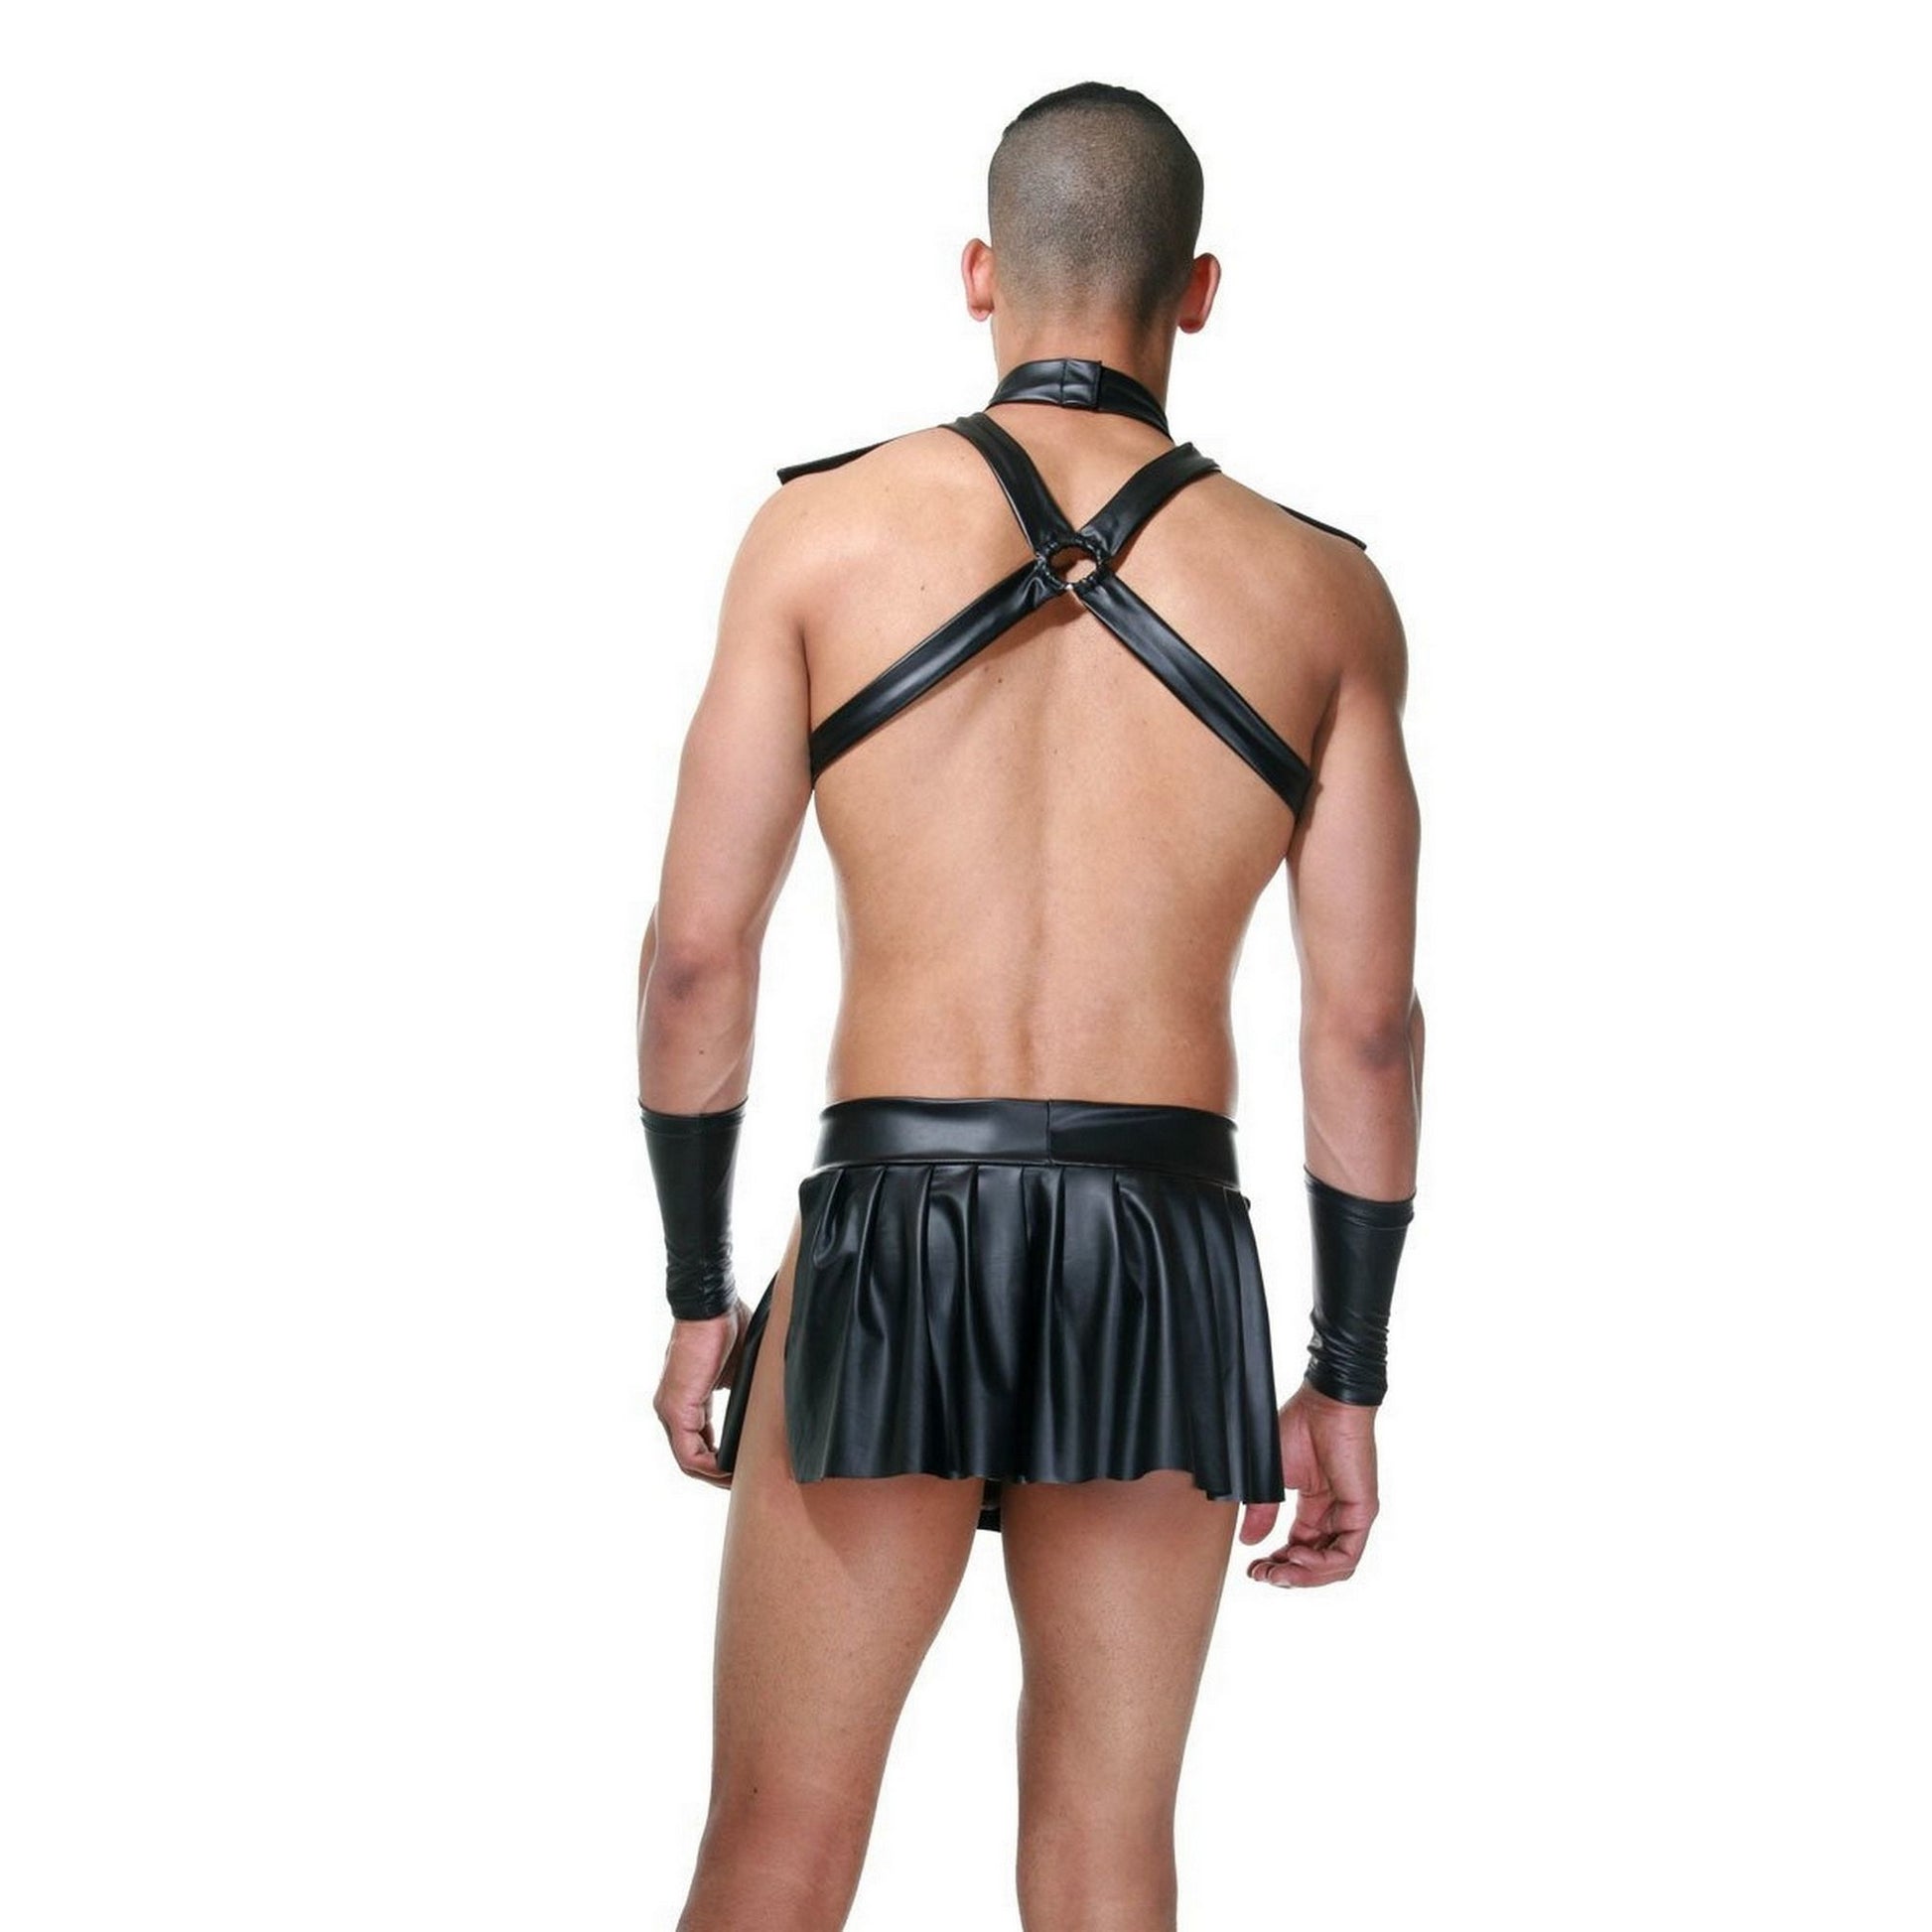 Sexy Gladiator Costume - Mens Lingerie Bodysuit - Black Warrior